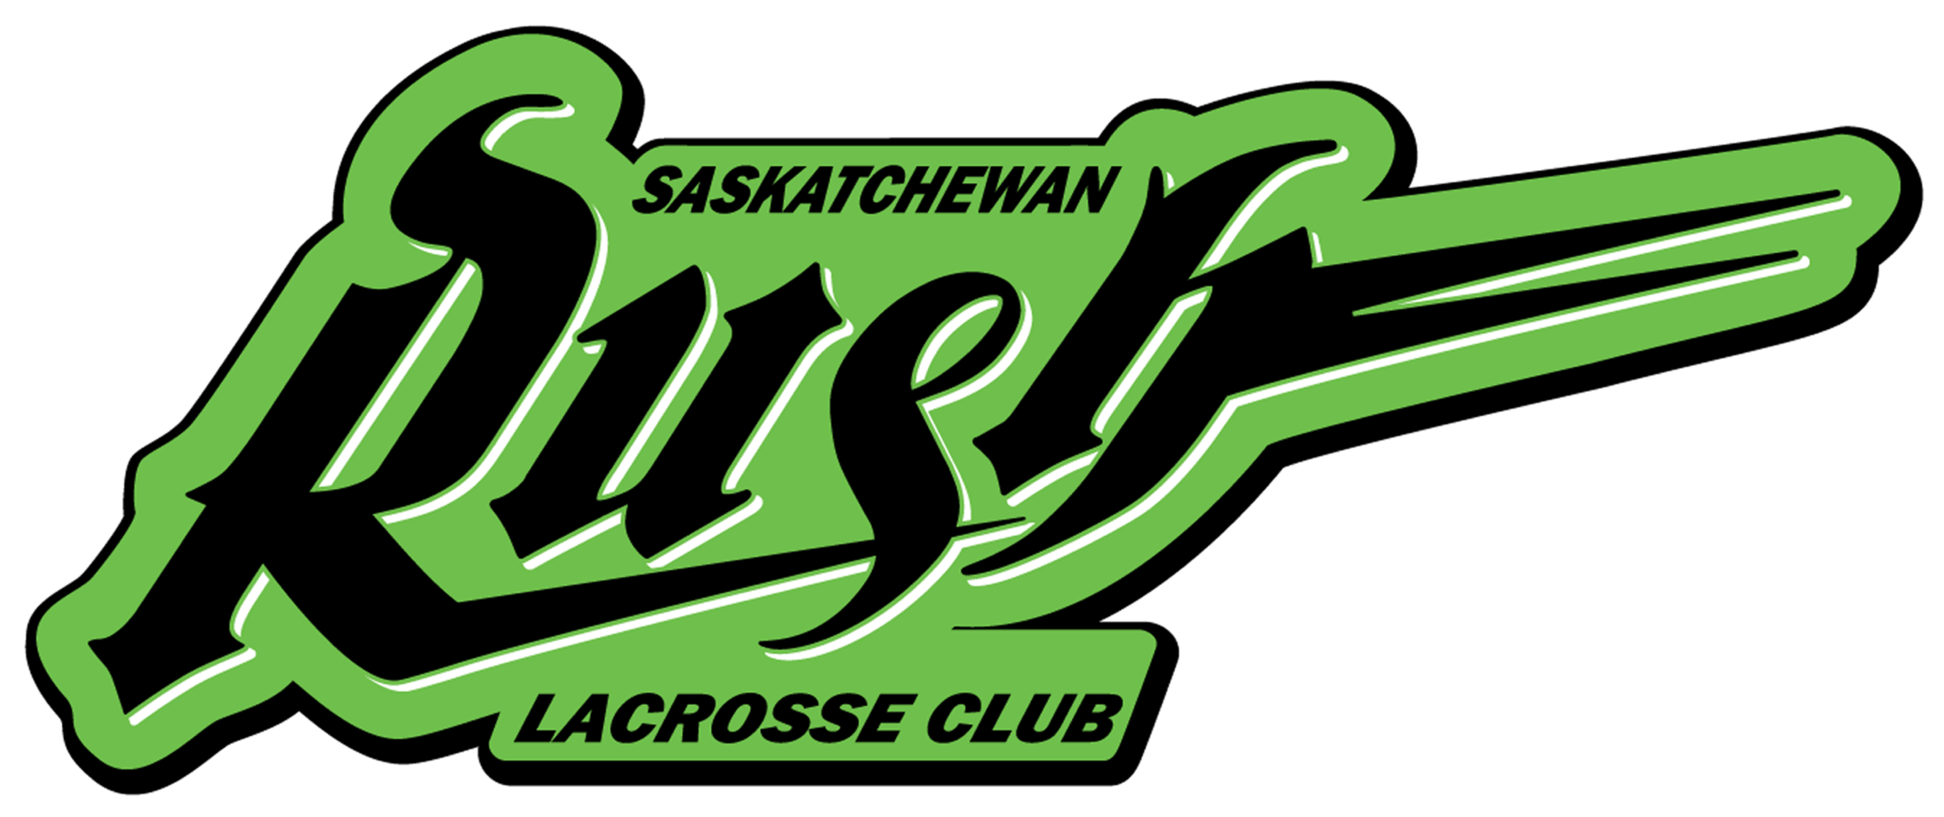 Rush Announce 2022 Training Camp Saskatoon Schedule